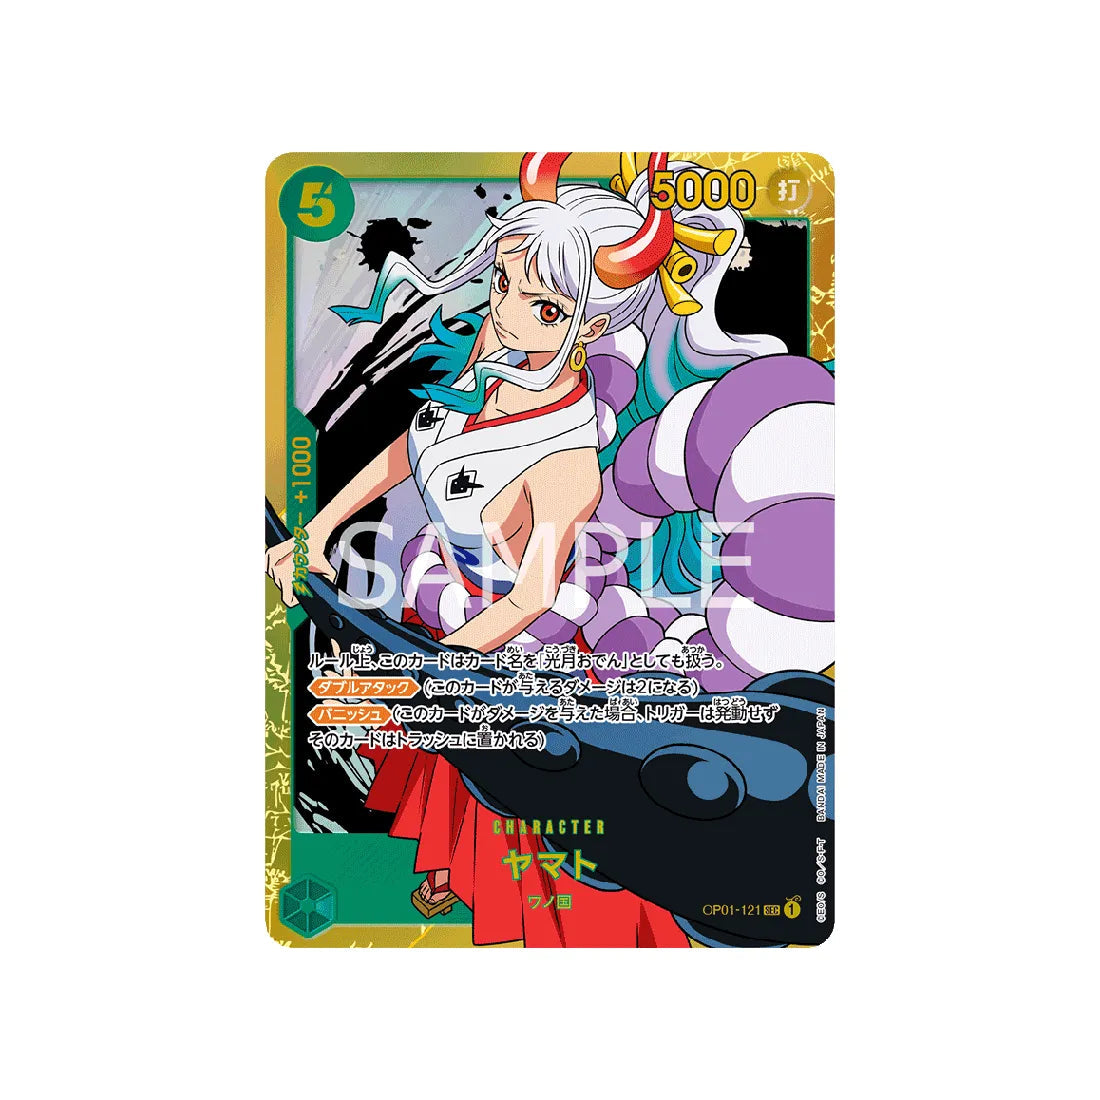 Kuzan OP02-121 SEC - Jeu de cartes One Piece [Carte japonaise